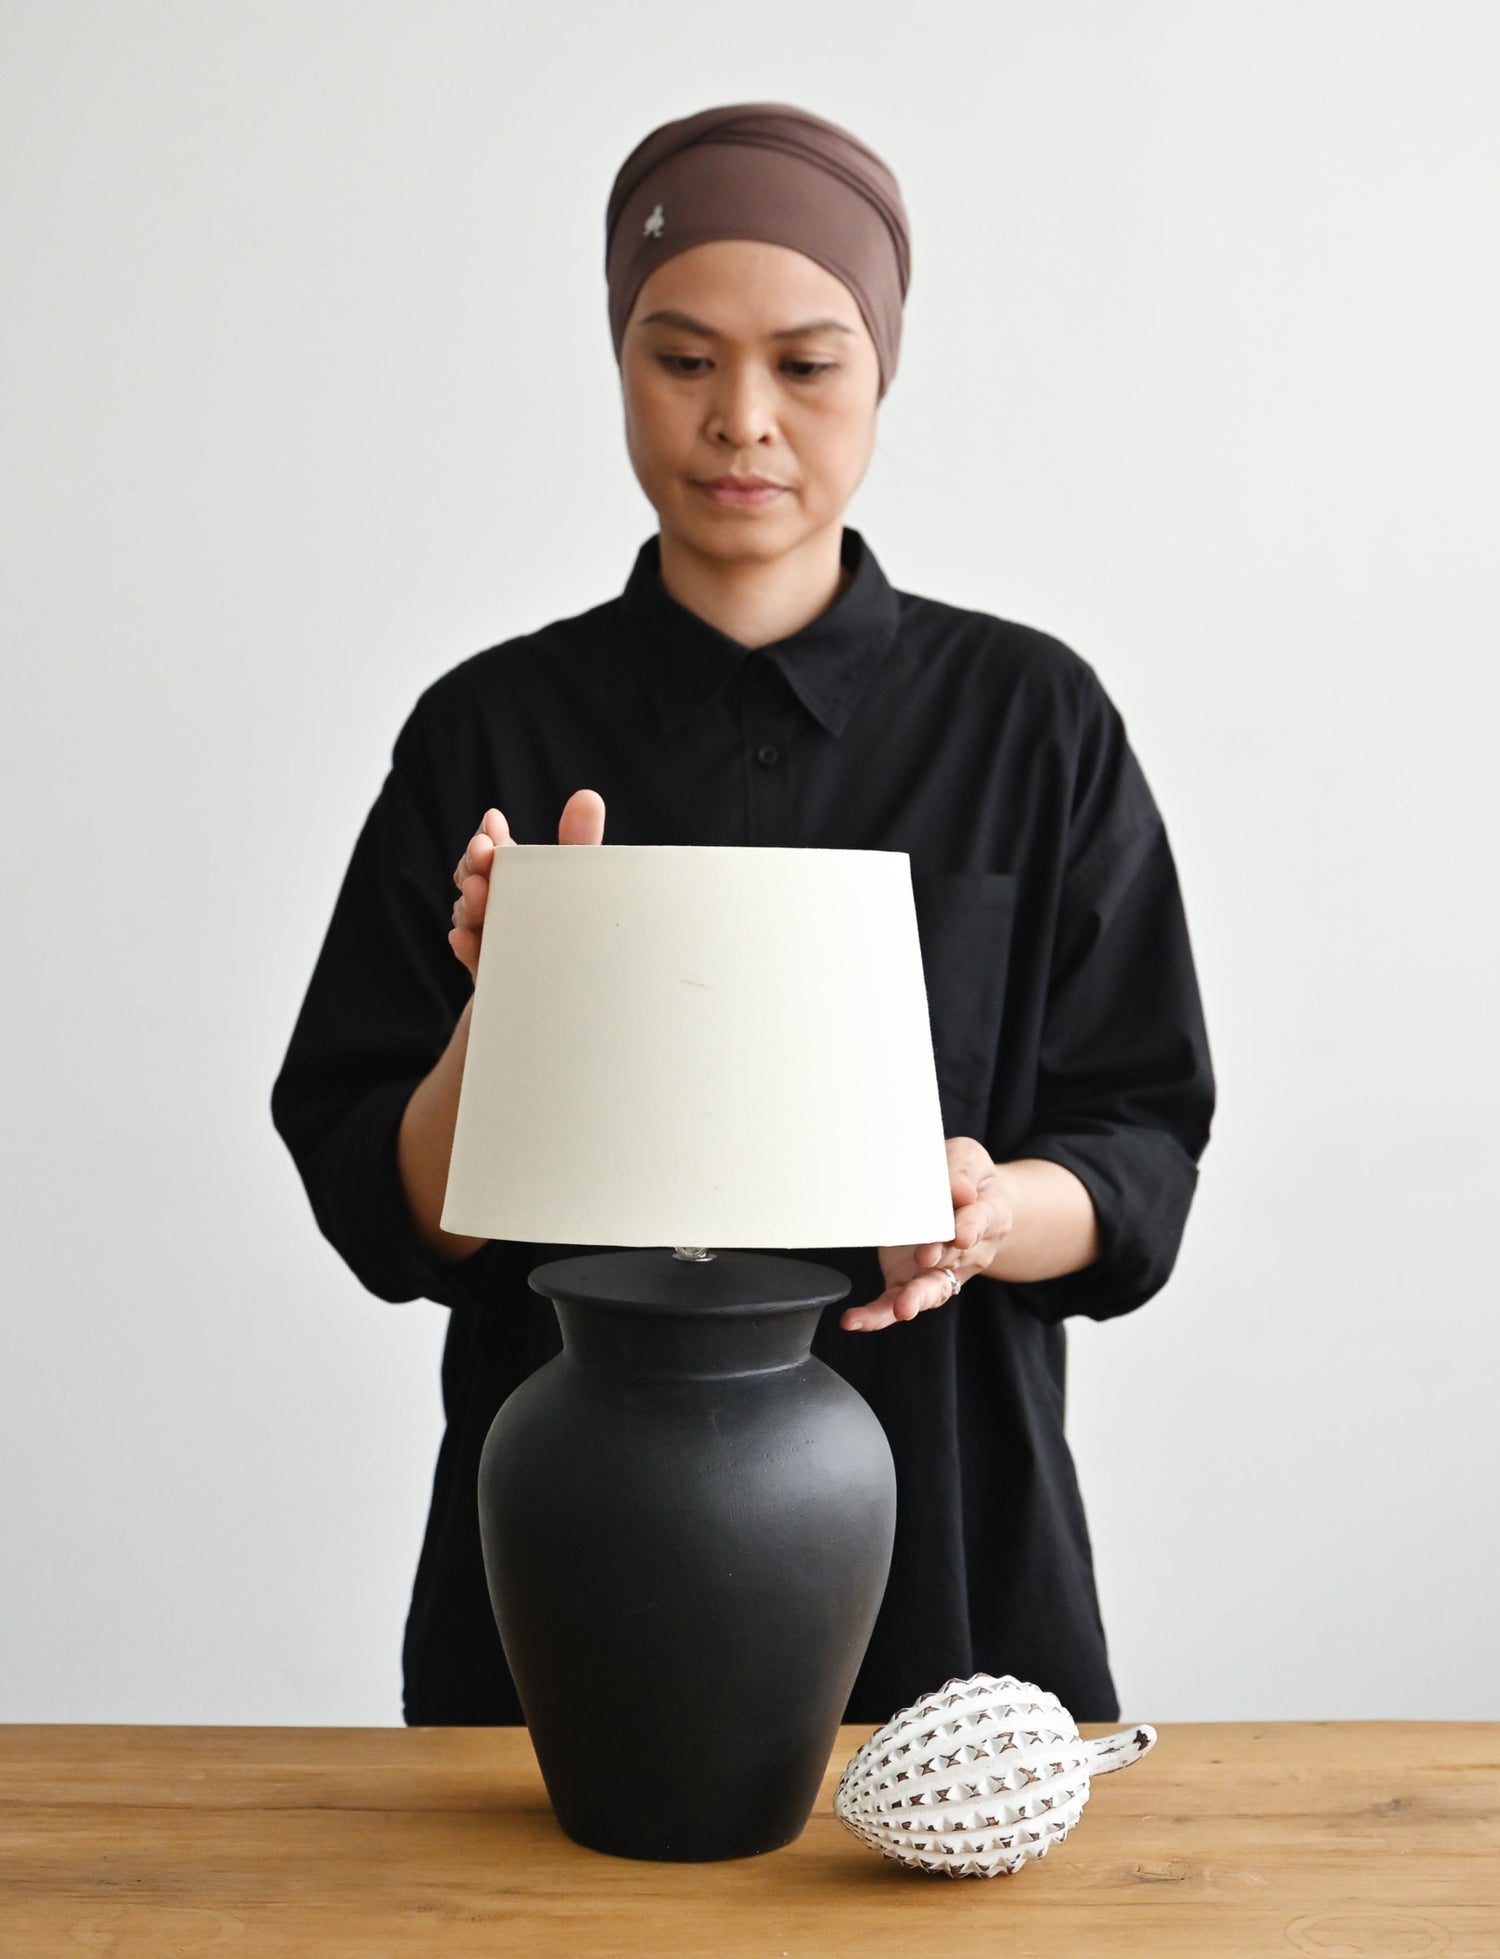 Black Nusa Lamp